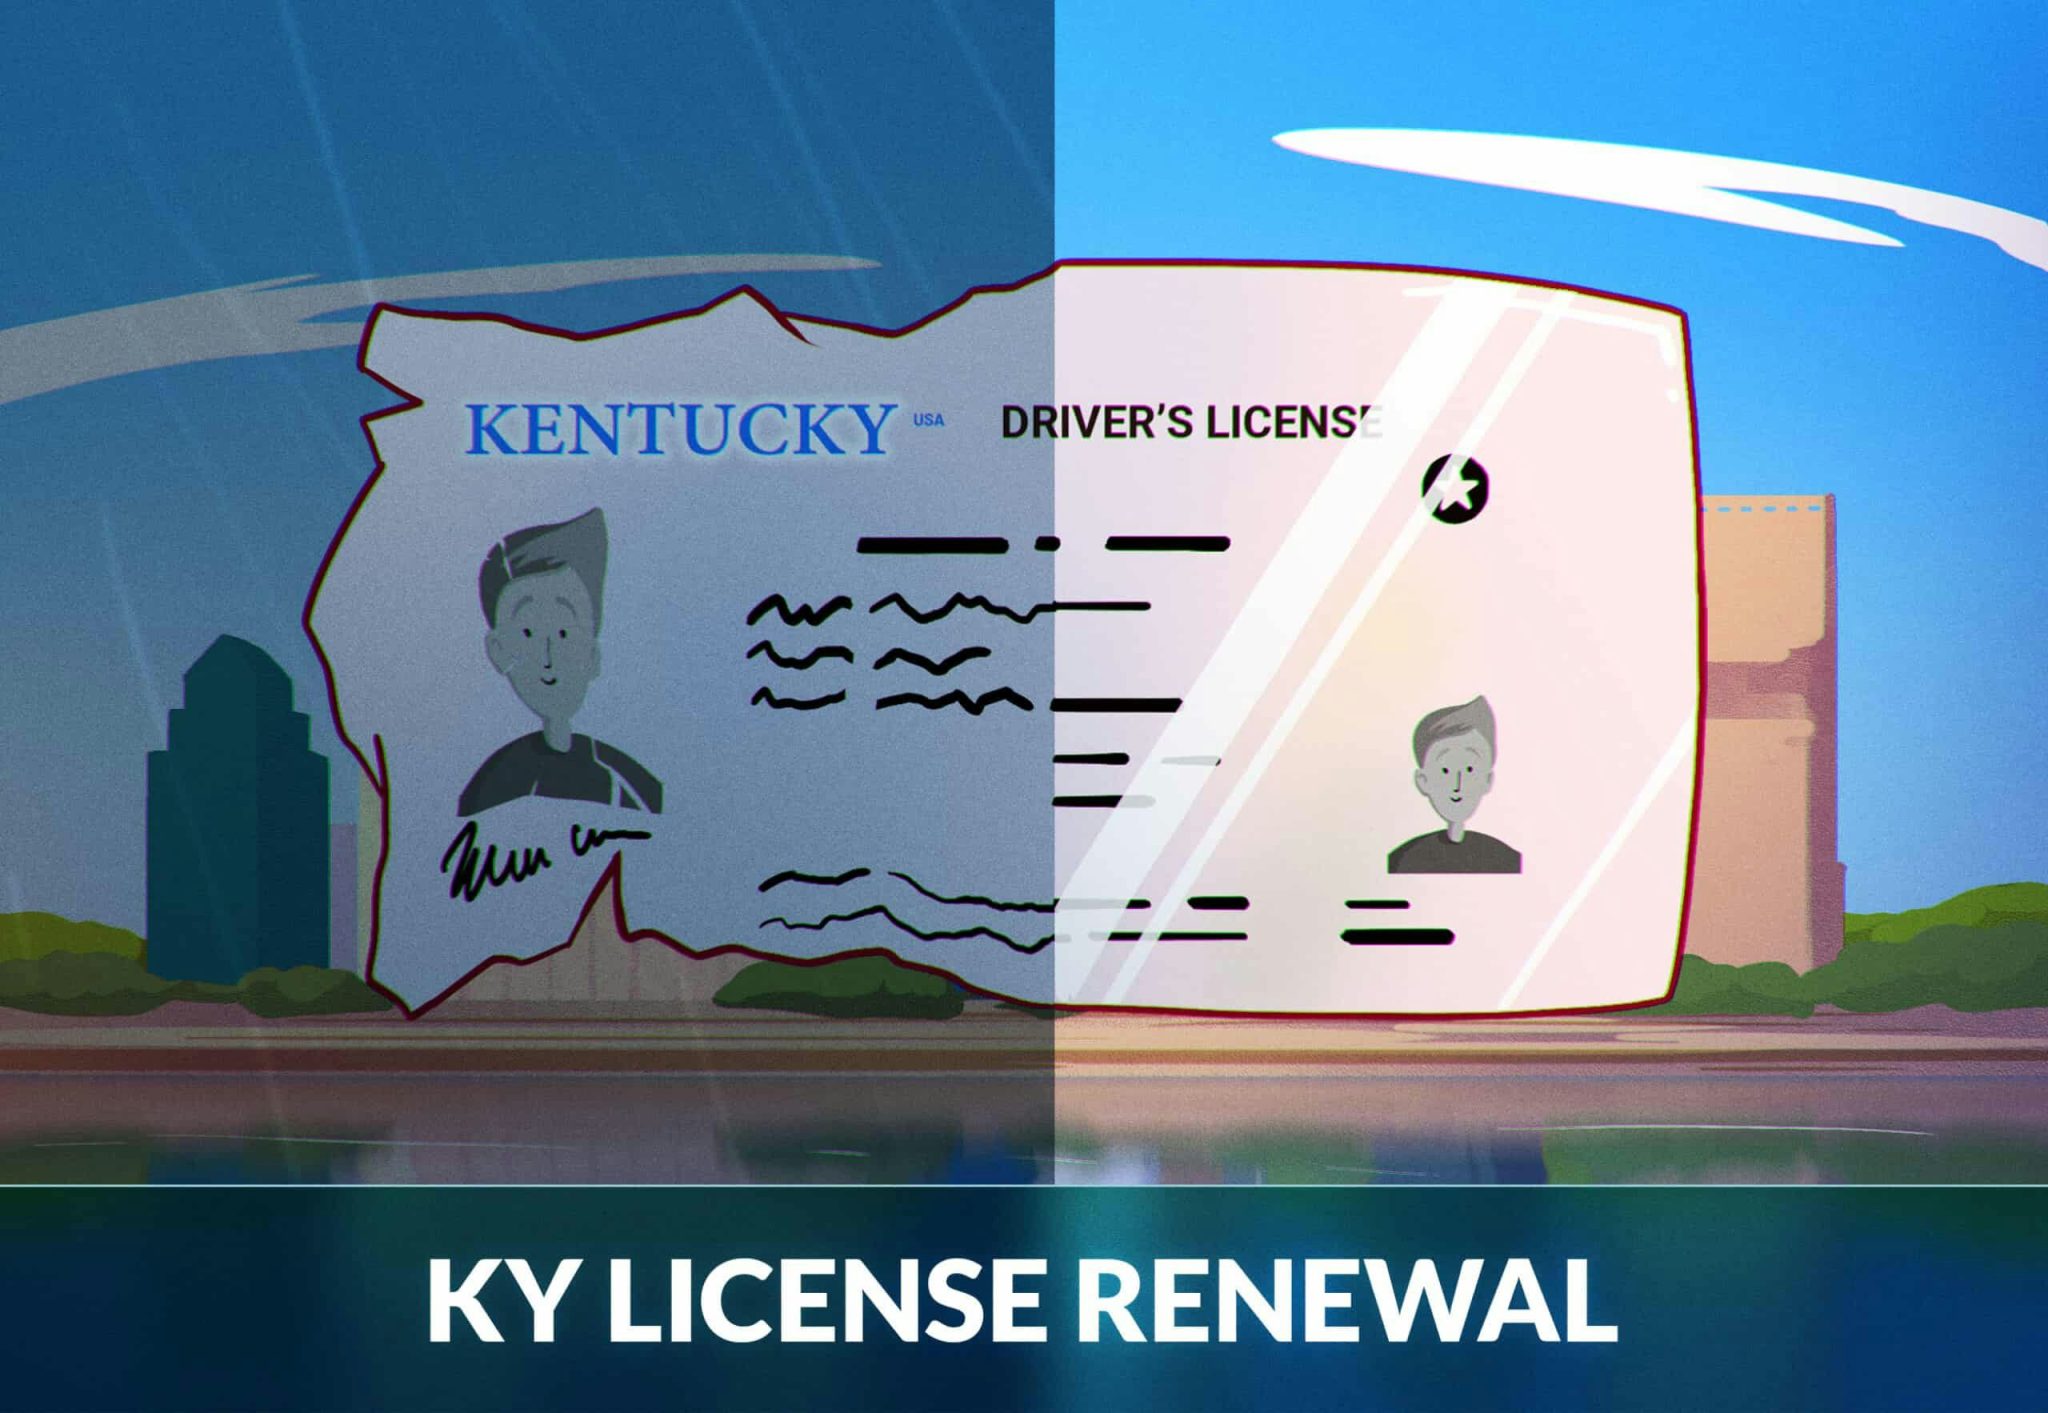 fake drivers license maker download